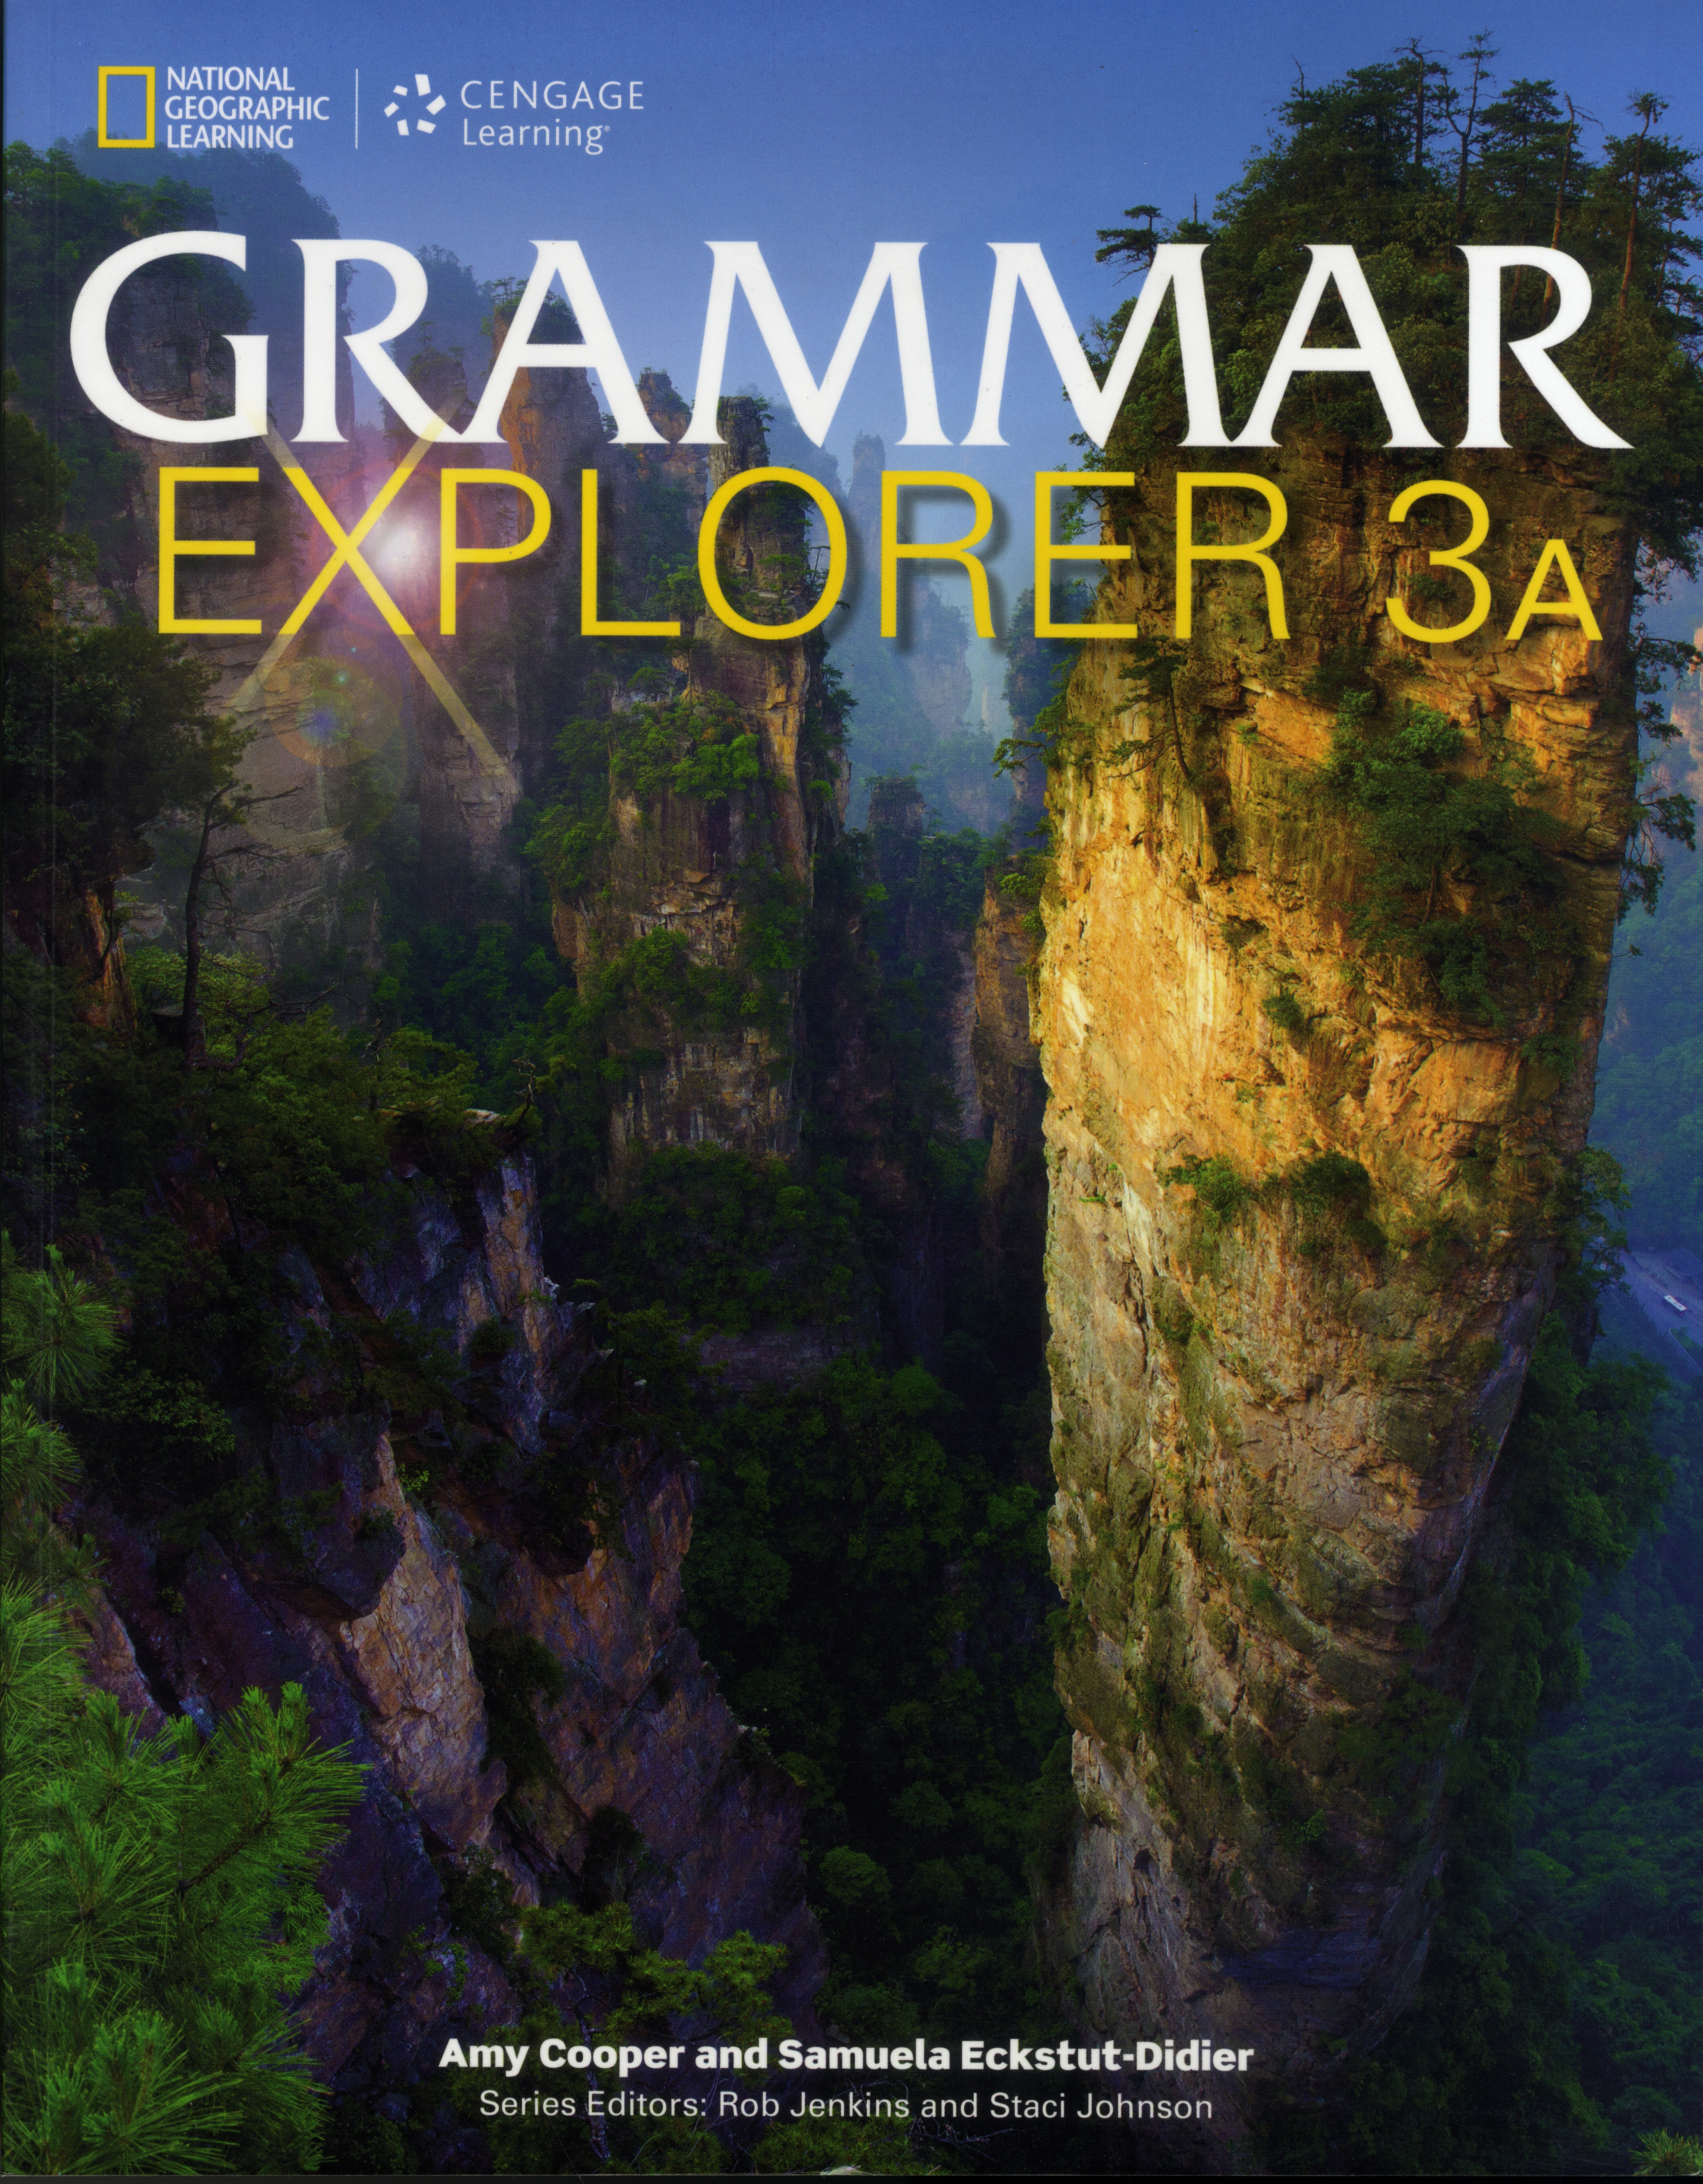 Grammar Explorer Level 3 Split-A